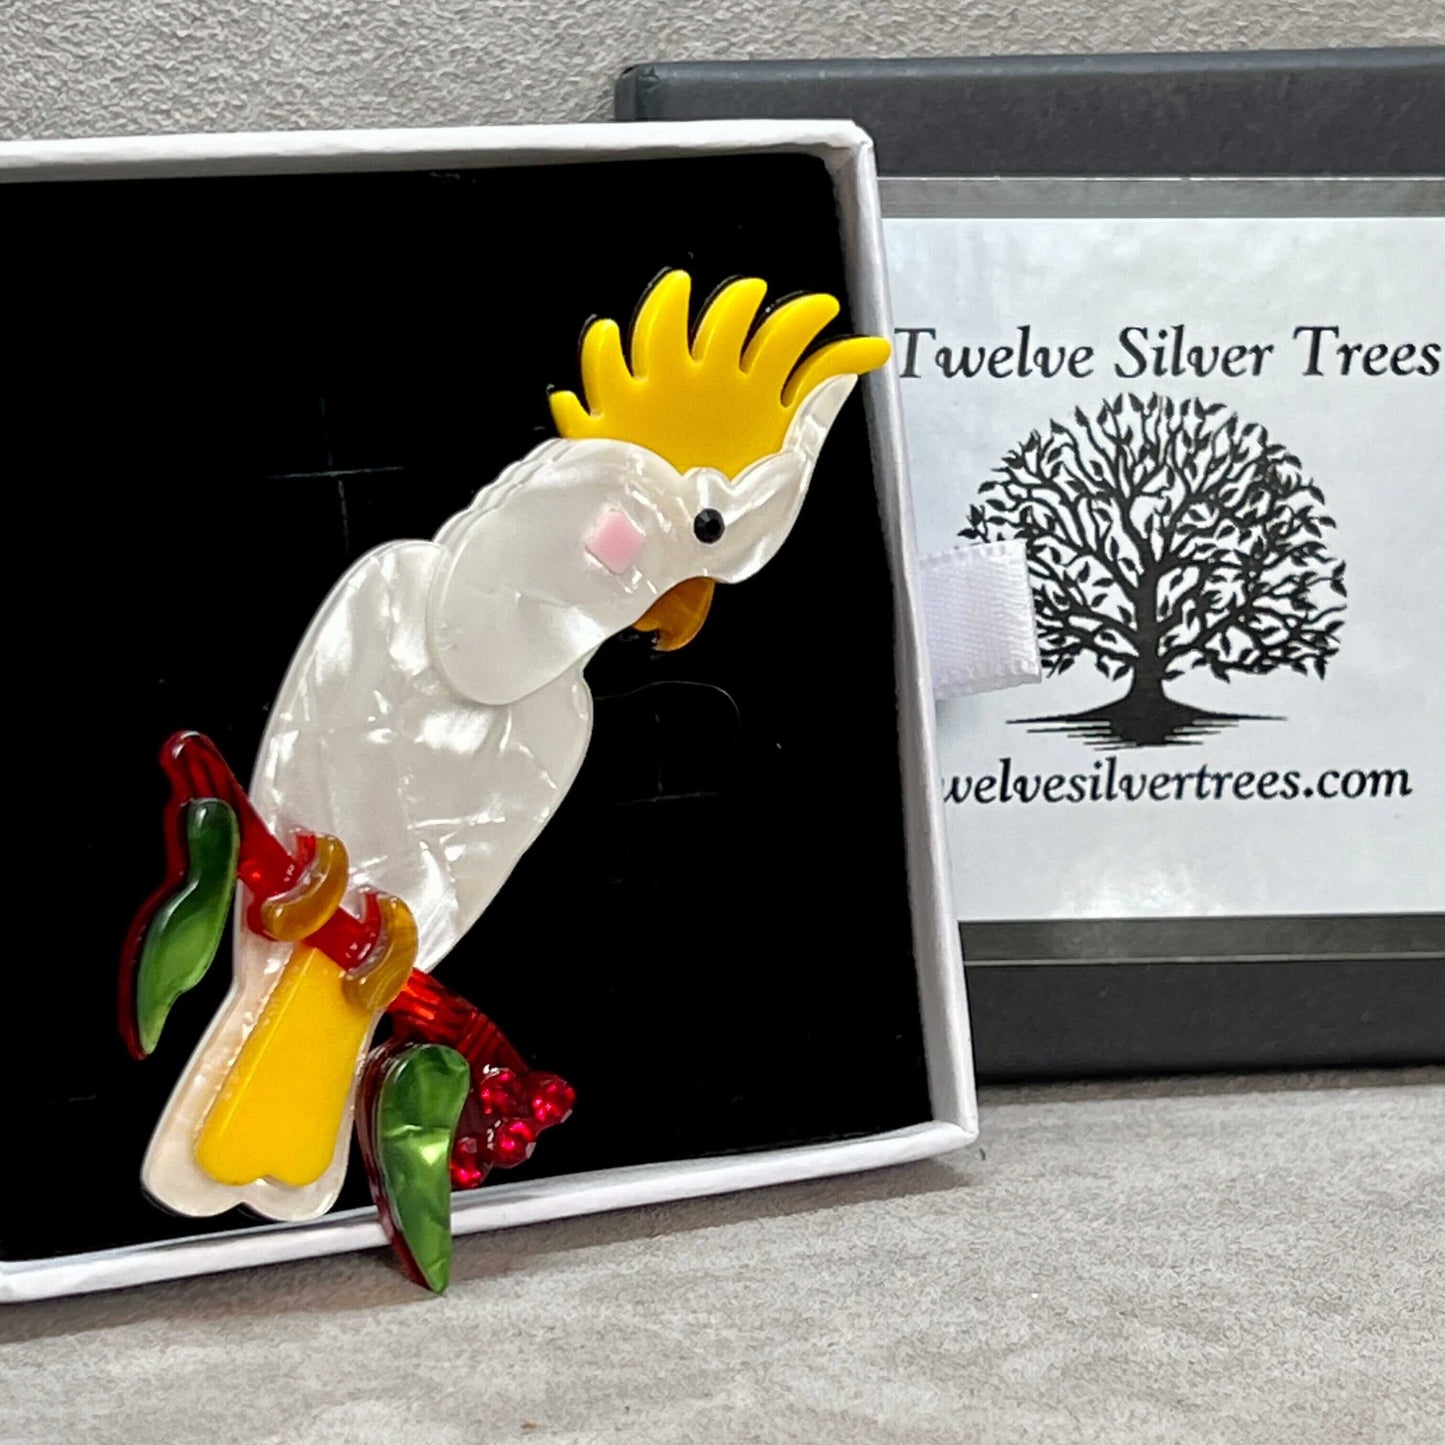 Handmade Acrylic Art Brooch - The cockatoo - Twelve Silver Trees